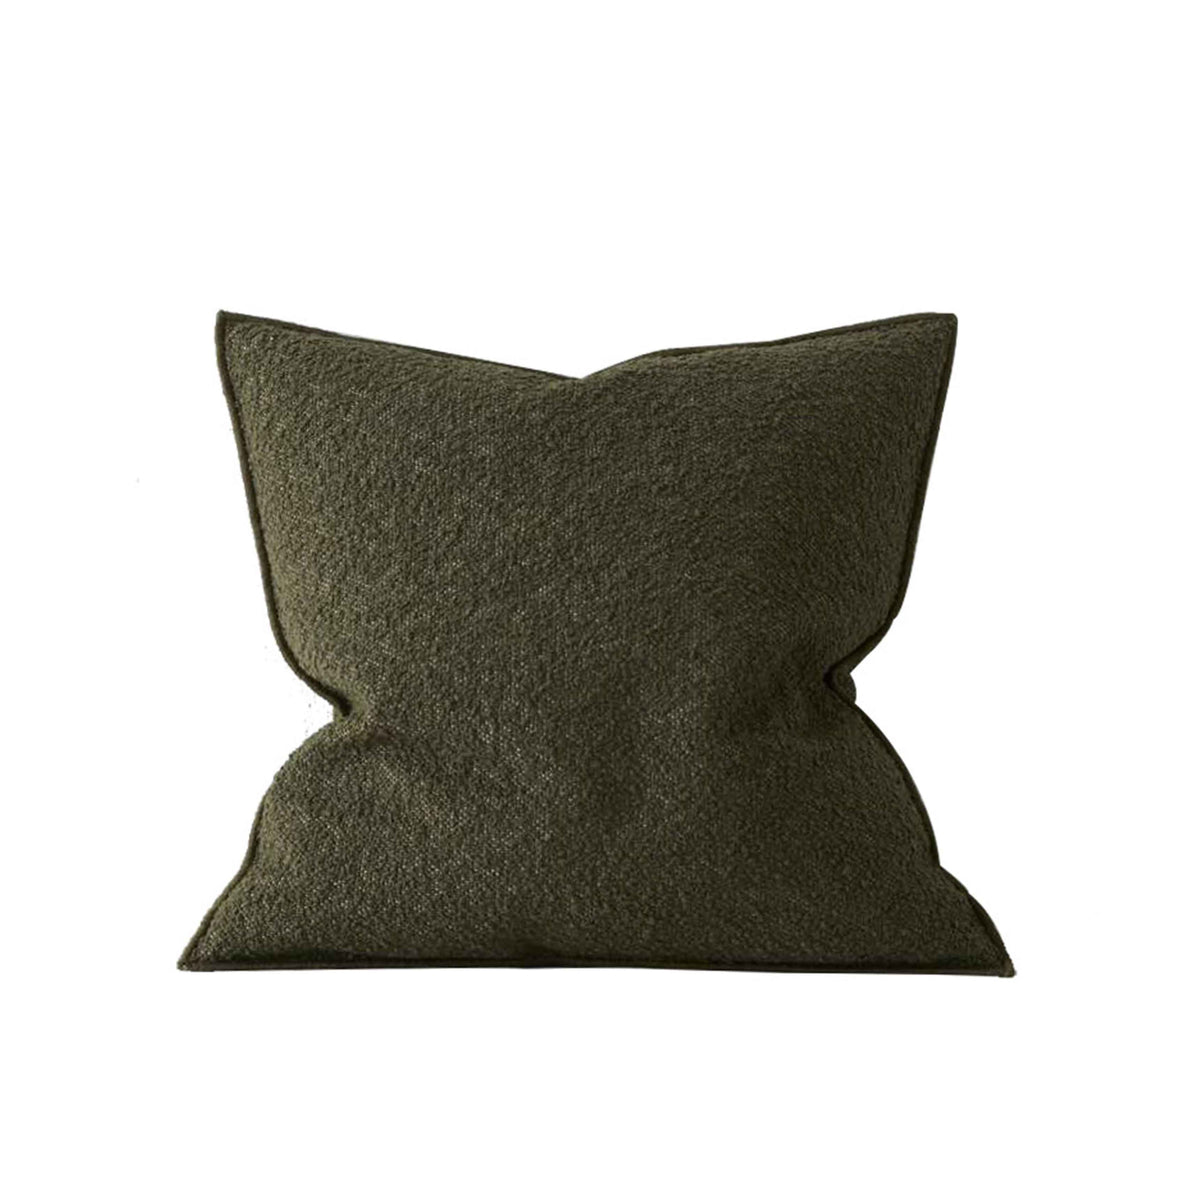 Alberto Cushion 50cm x 50cm - Cushion from Secret Sofa - Just $99.00! Shop now at Secret Sofa